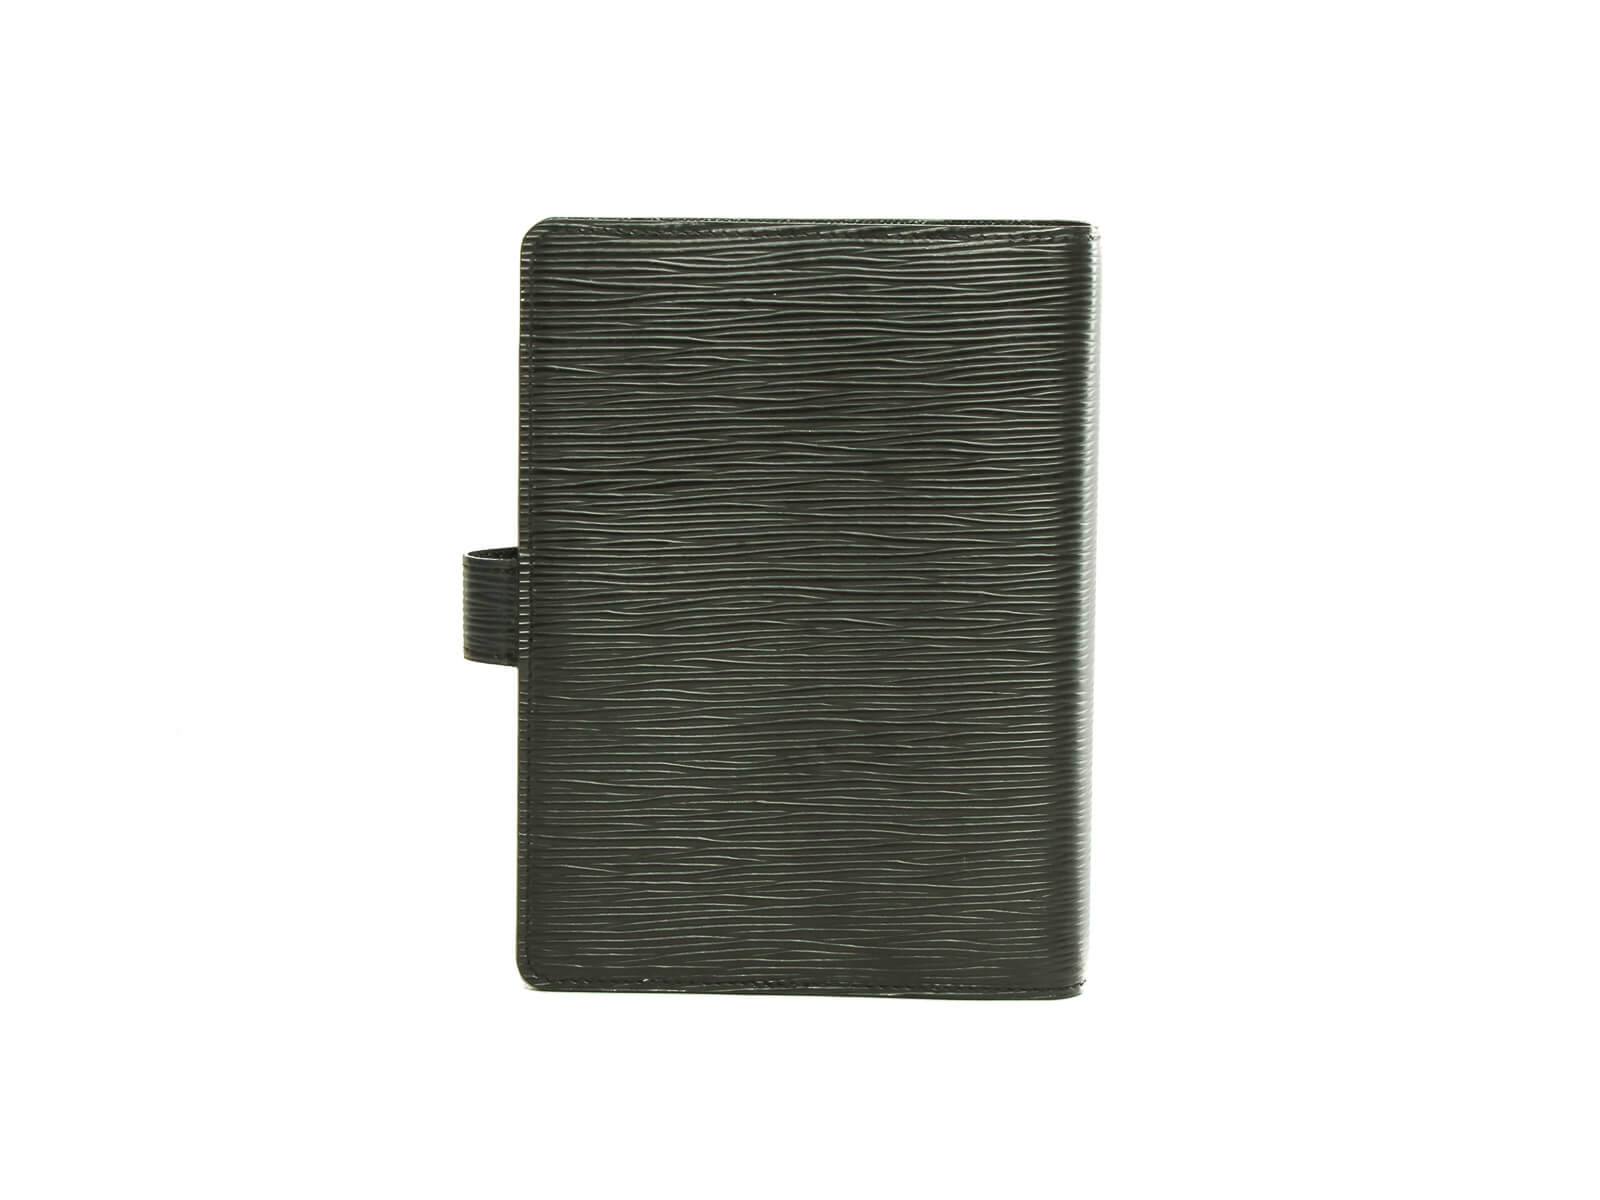 Louis Vuitton Black Epi Leather Medium Ring Agenda Cover Louis